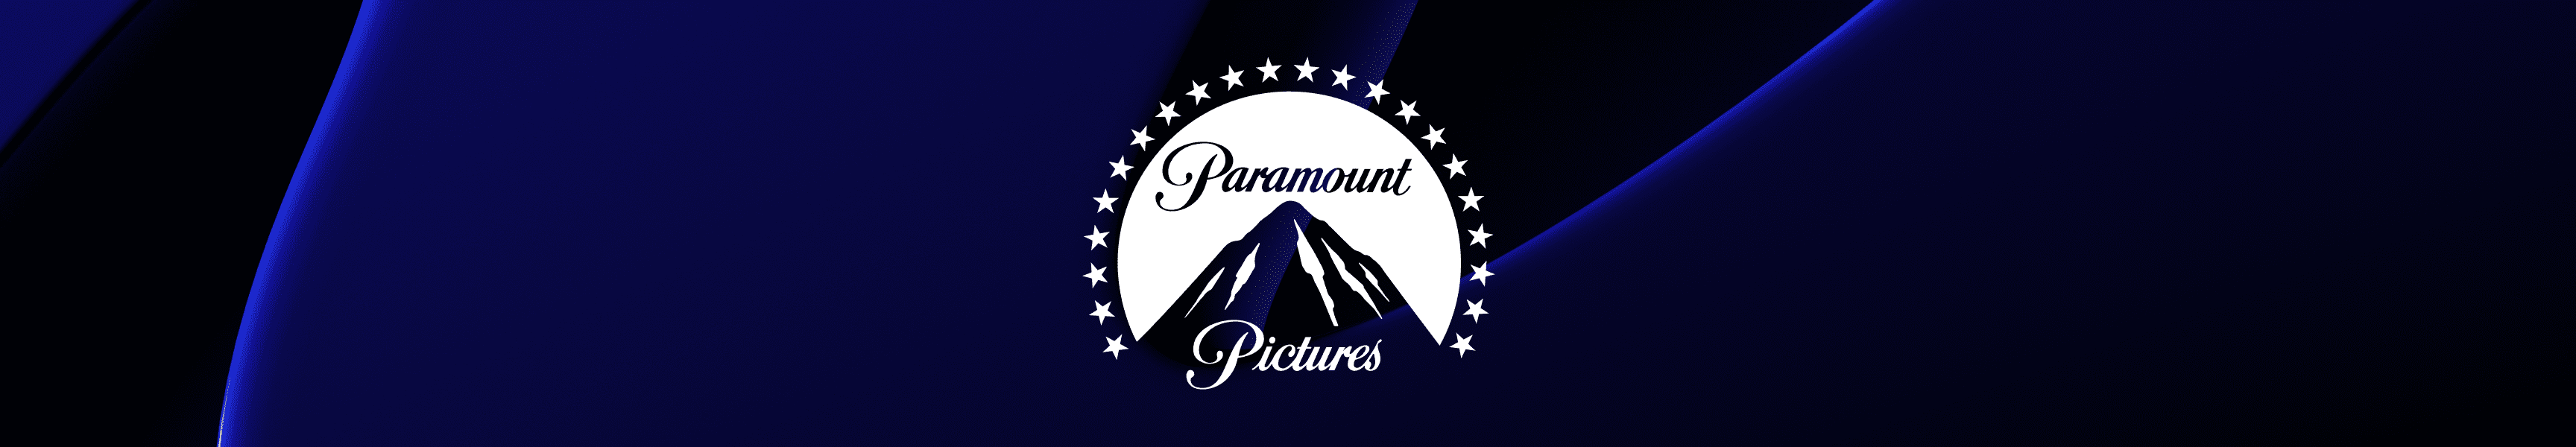 Paramount Pictures Jogger & Trainingshosen